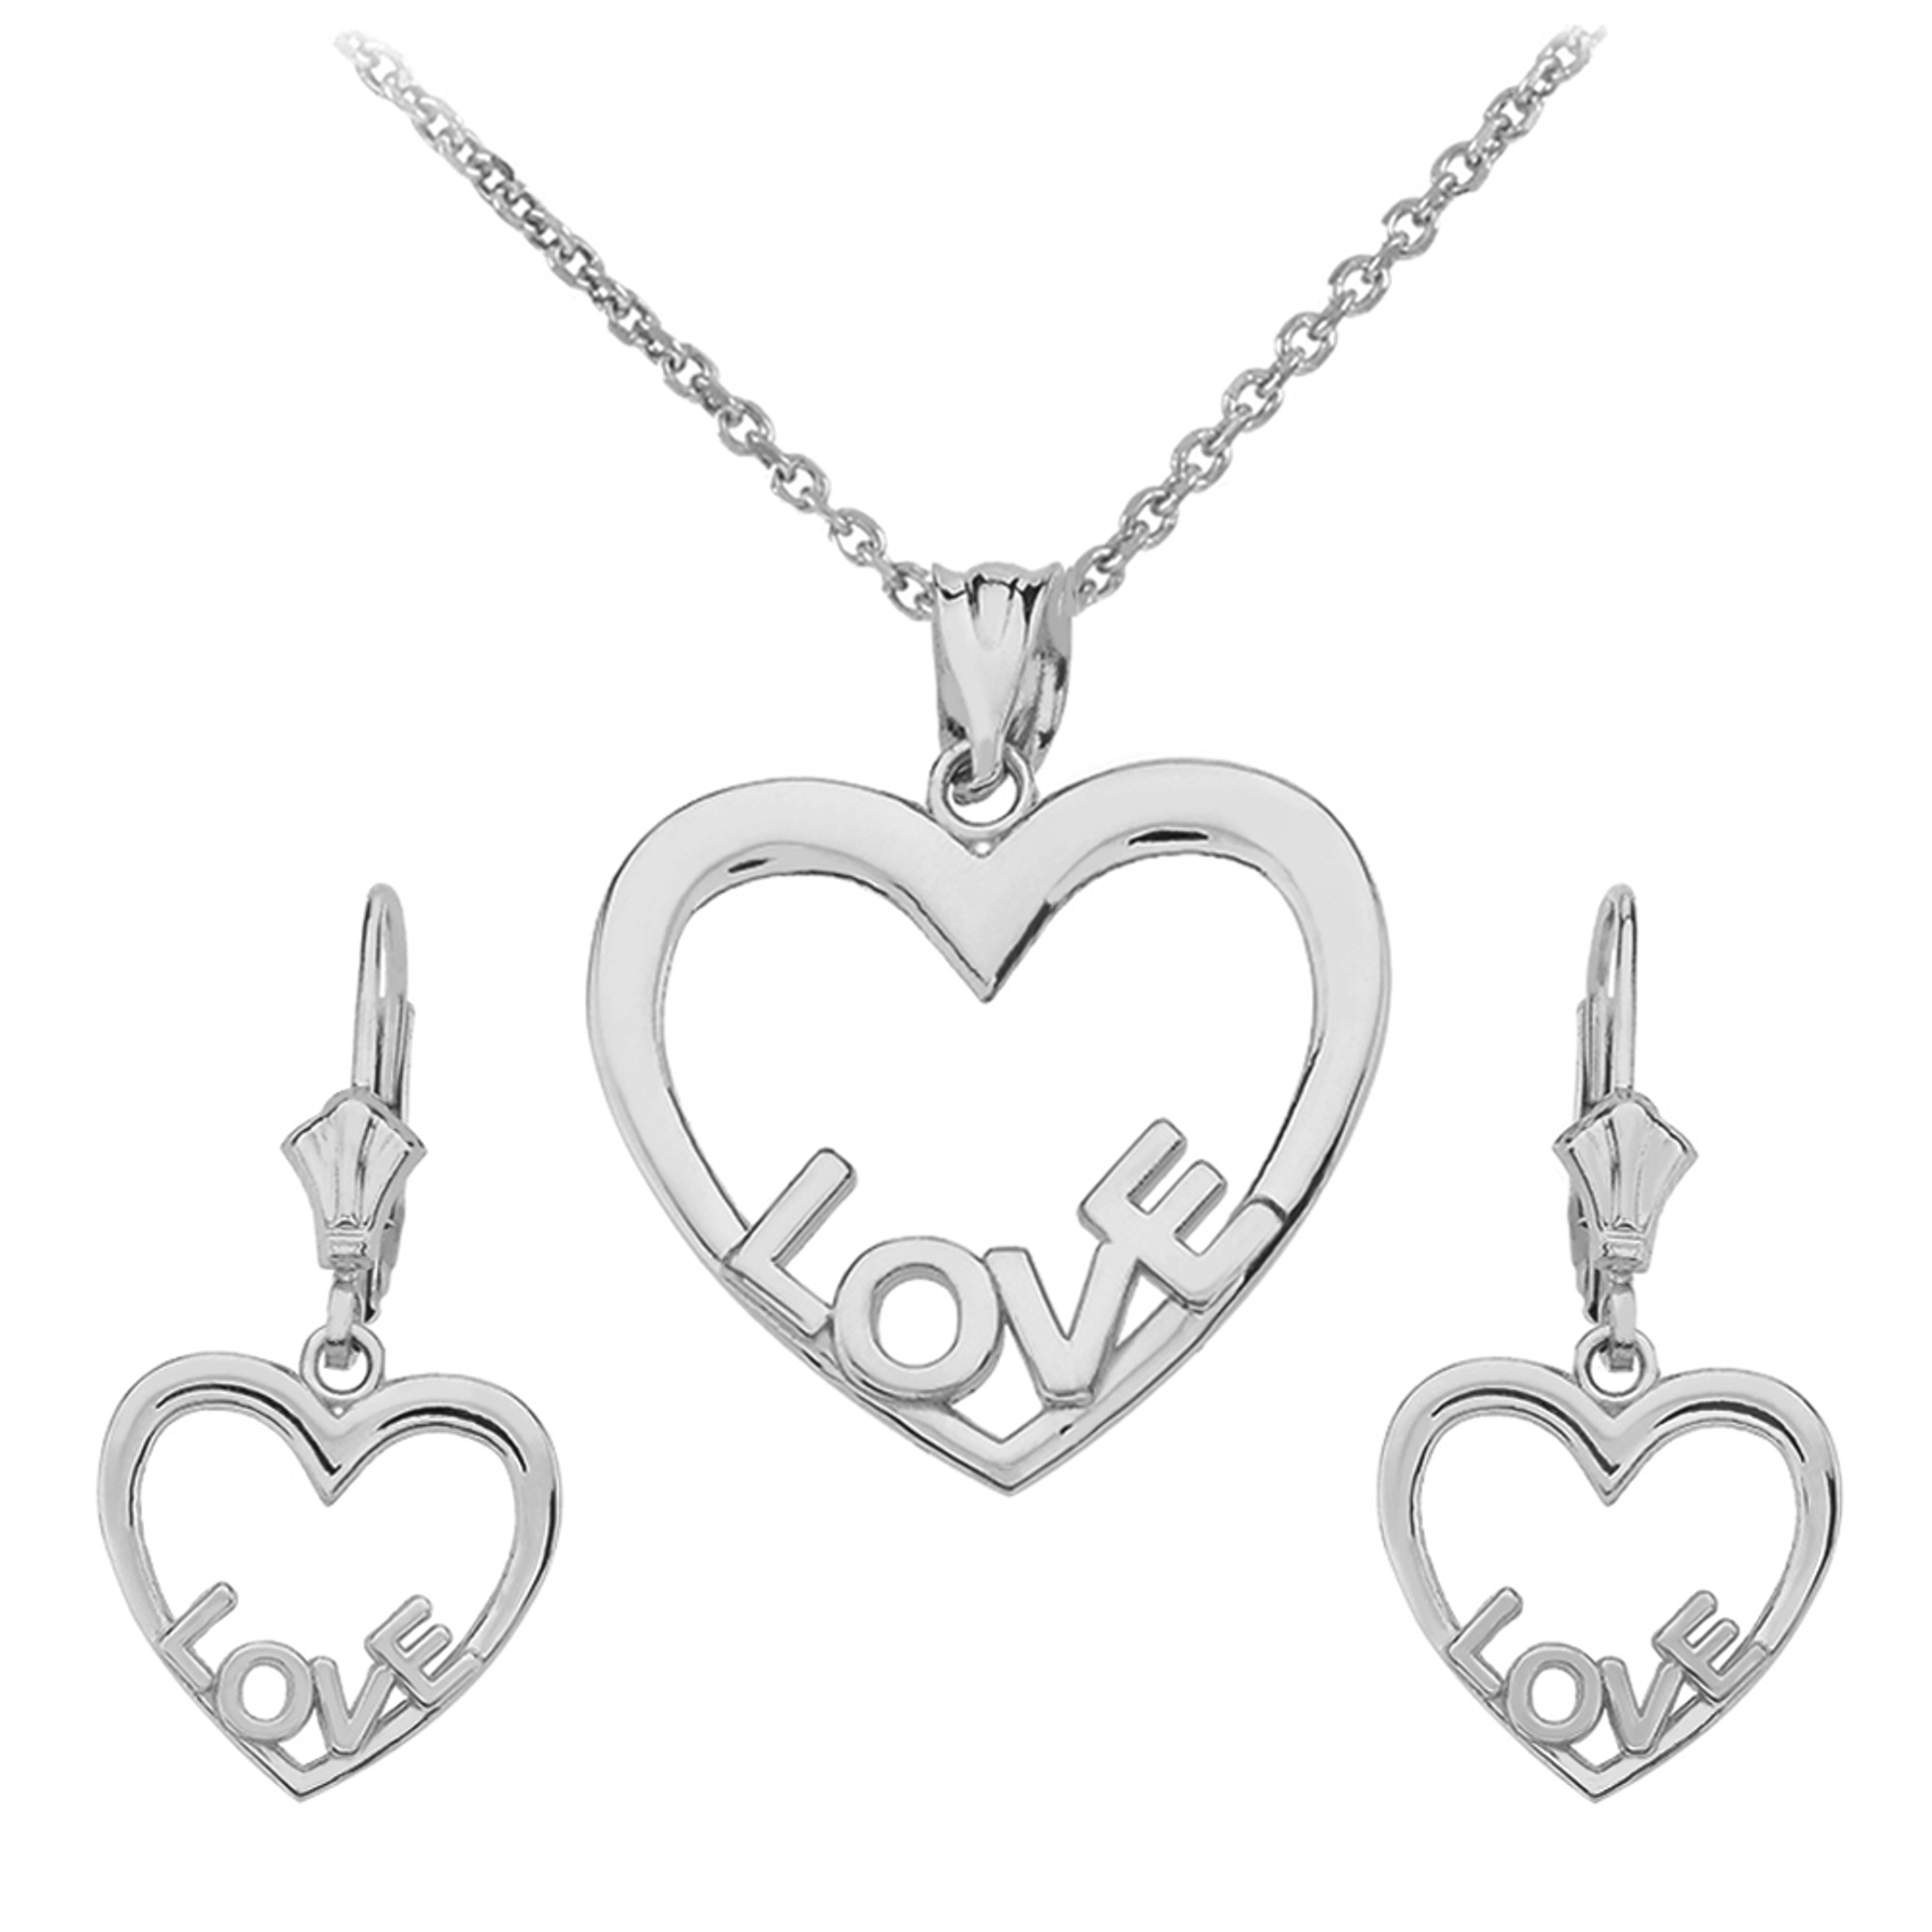 Quartz Pendant Necklace Earrings Ring | Pink Earrings Necklace Set - Heart-shaped  - Aliexpress